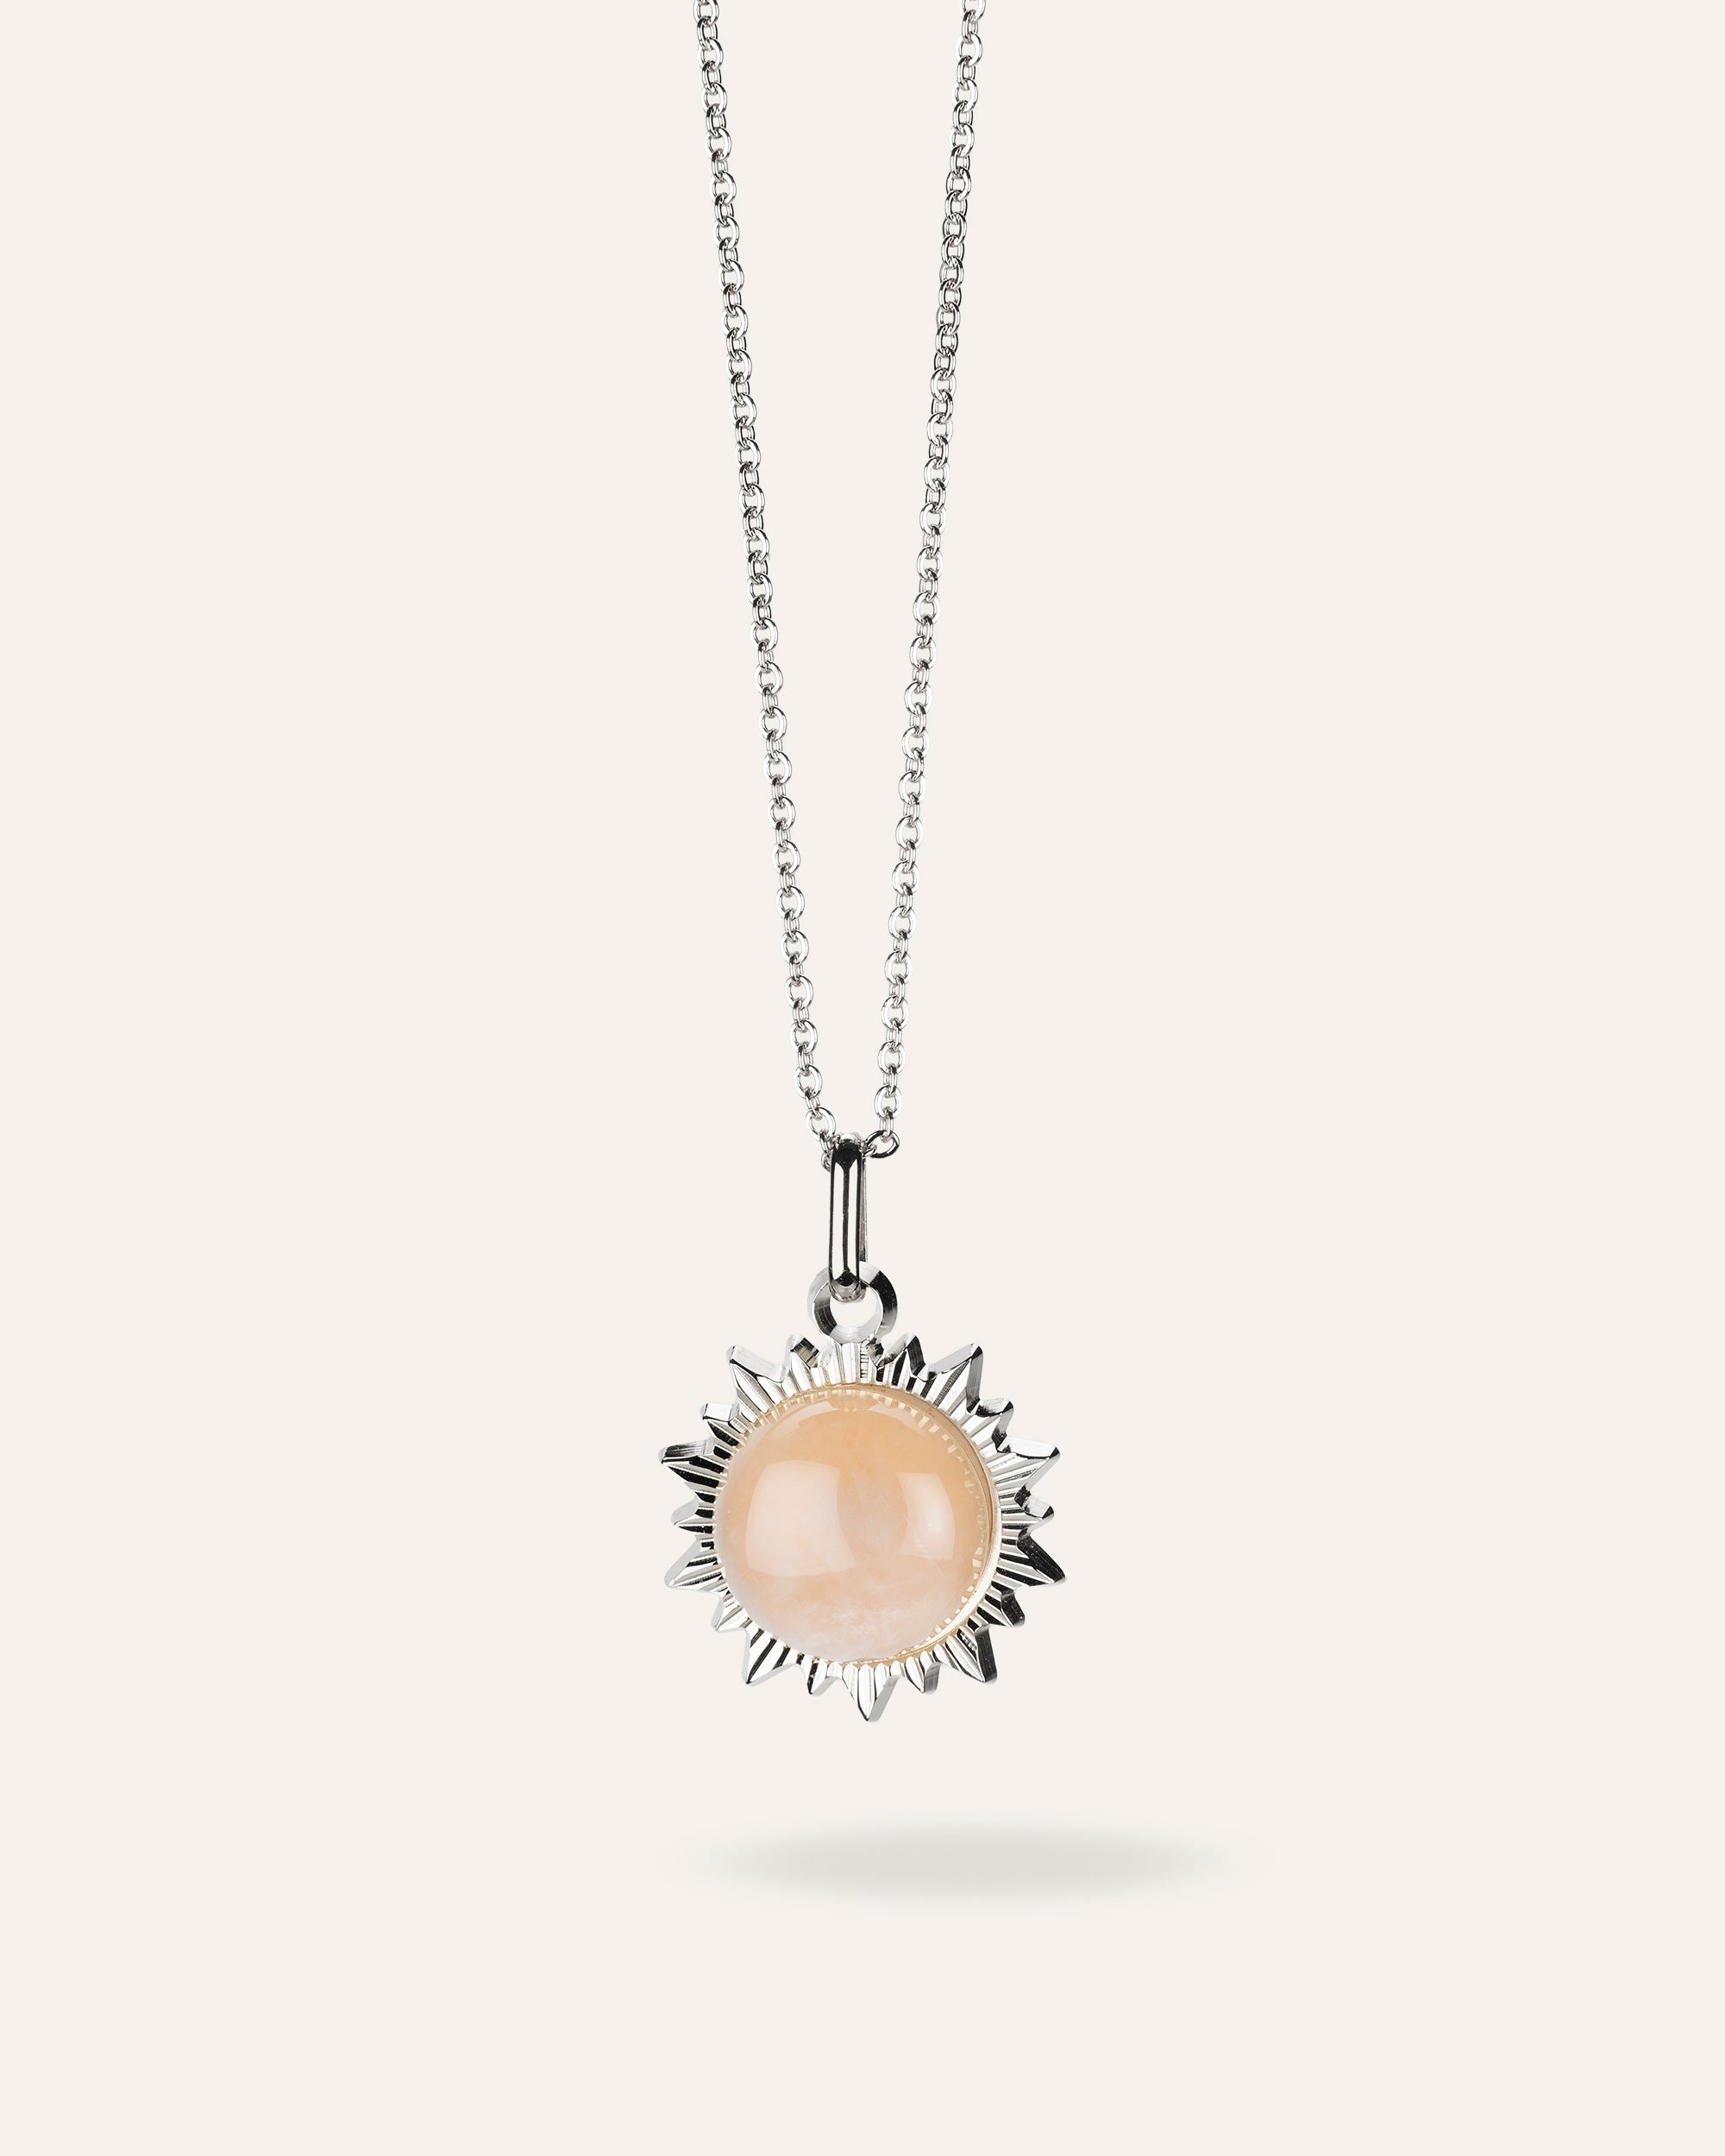 Silver and pink quartz sun necklace